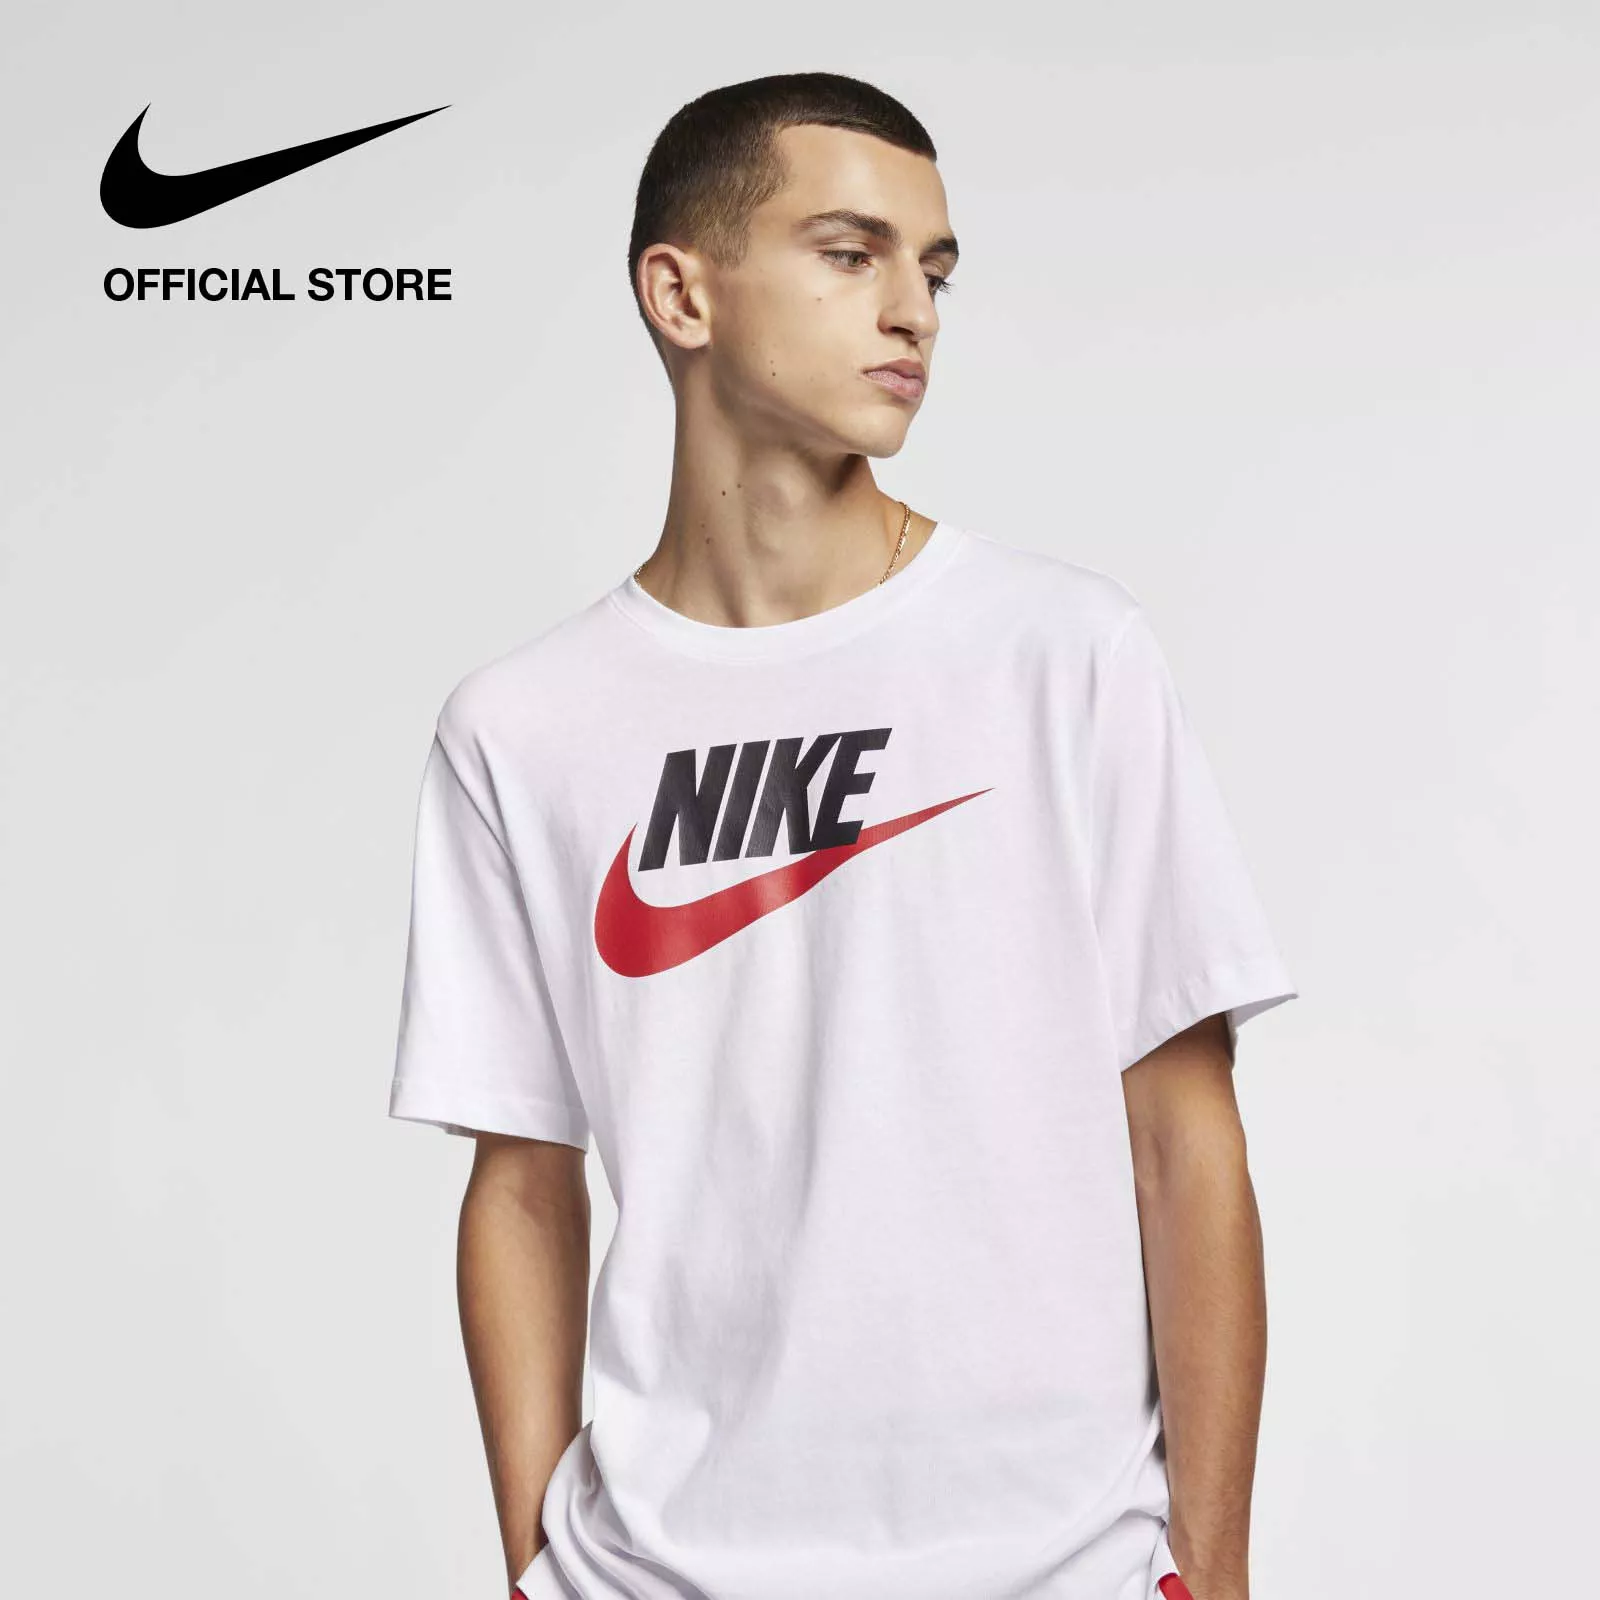 Nike Men's Sportswear T-Shirt - White ไนกี้ เสื้อยืดผู้ชาย ดรายฟิต - สีขาว